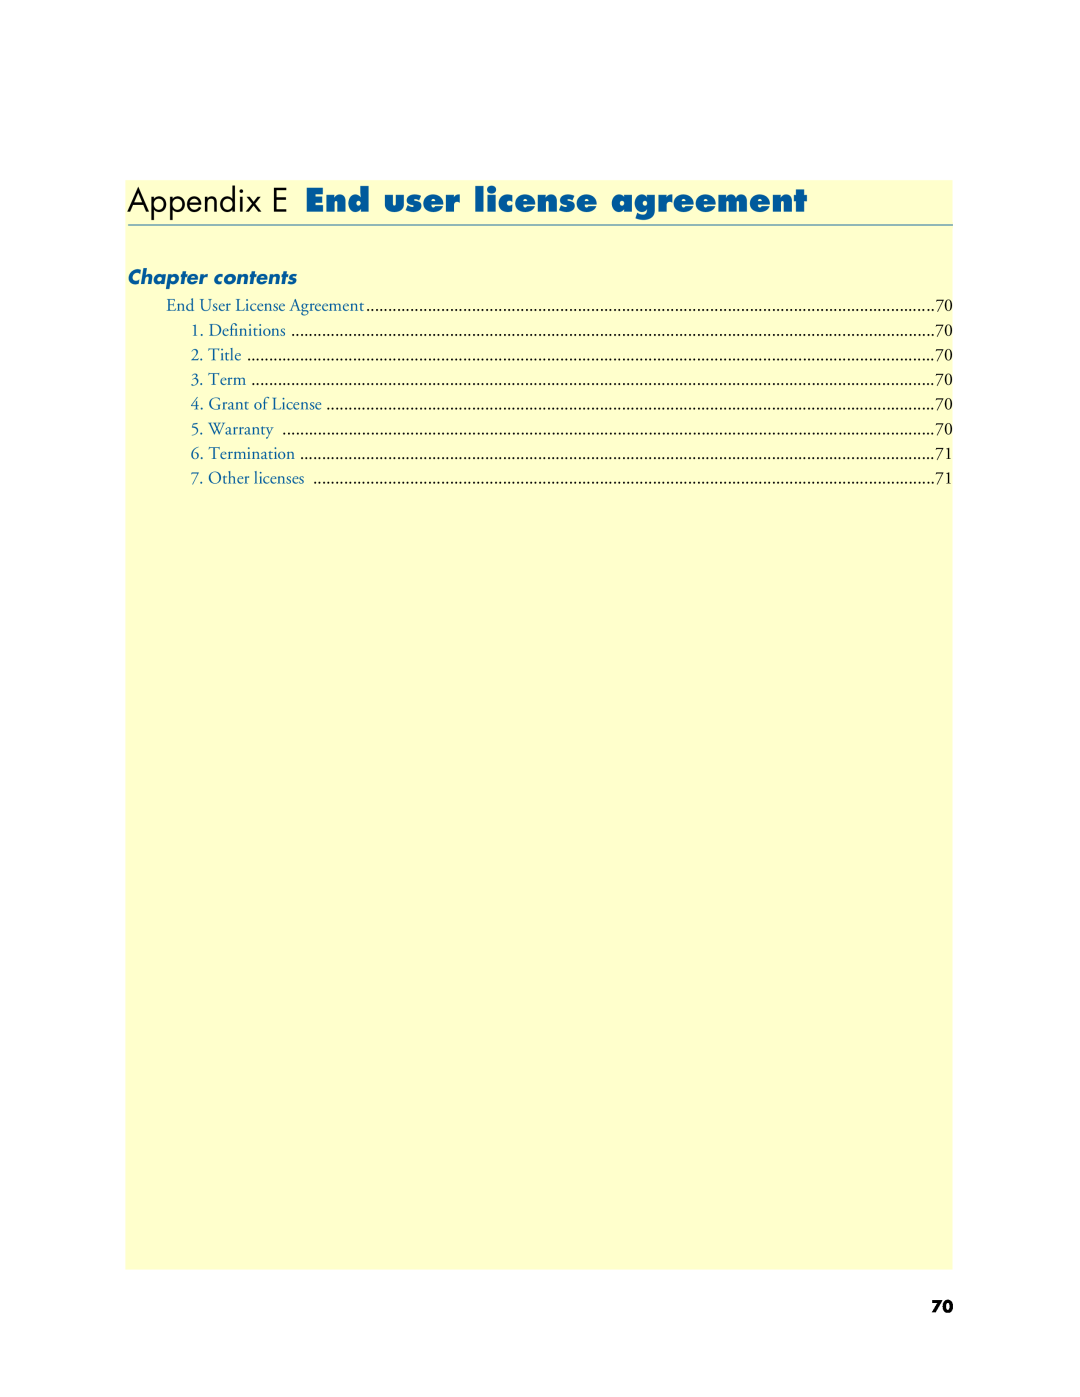 Patton electronic 4900 Appendix E End user license agreement, Chapter contents, End User License Agreement, Definitions 